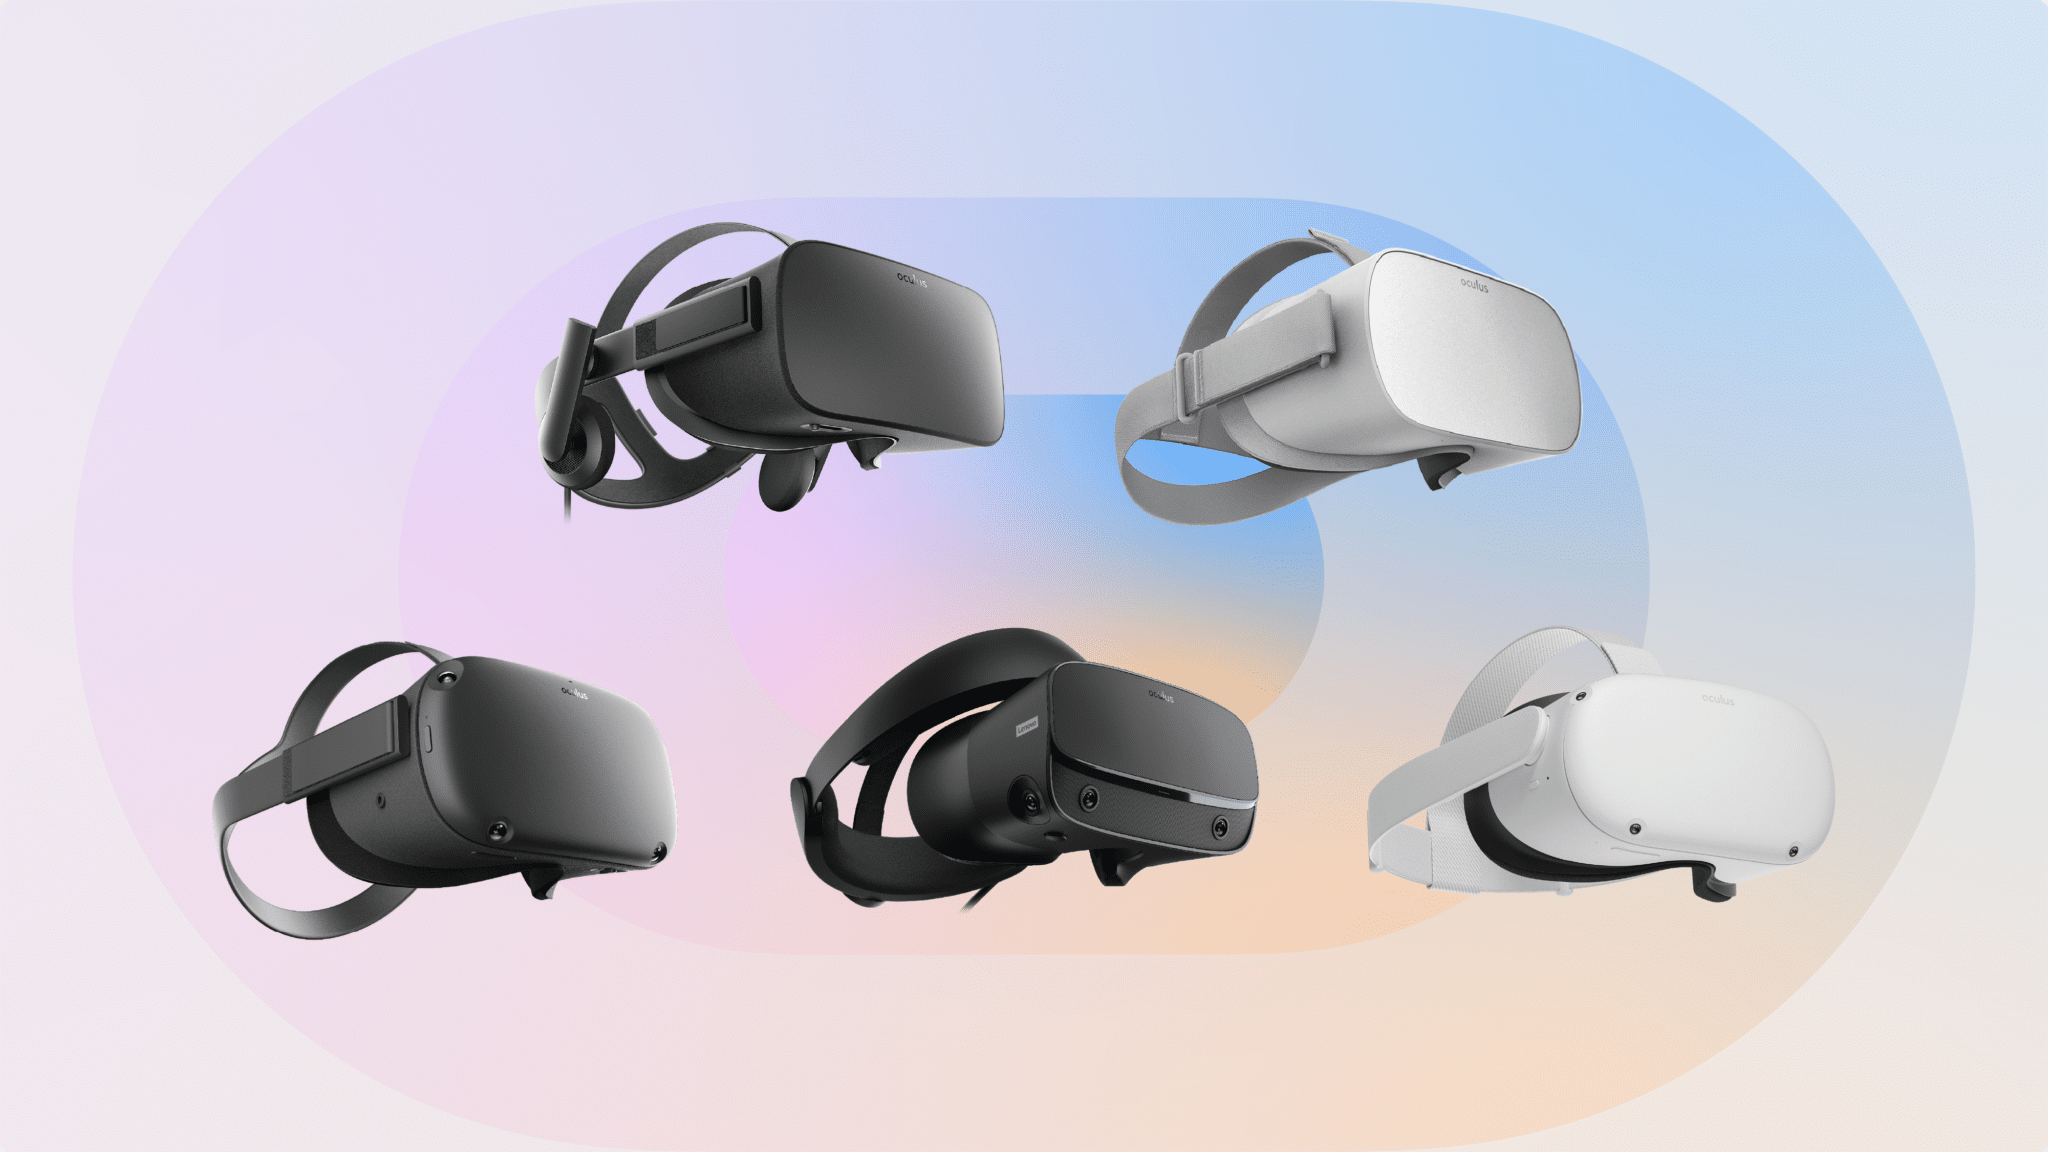 All Oculus CV Headsets